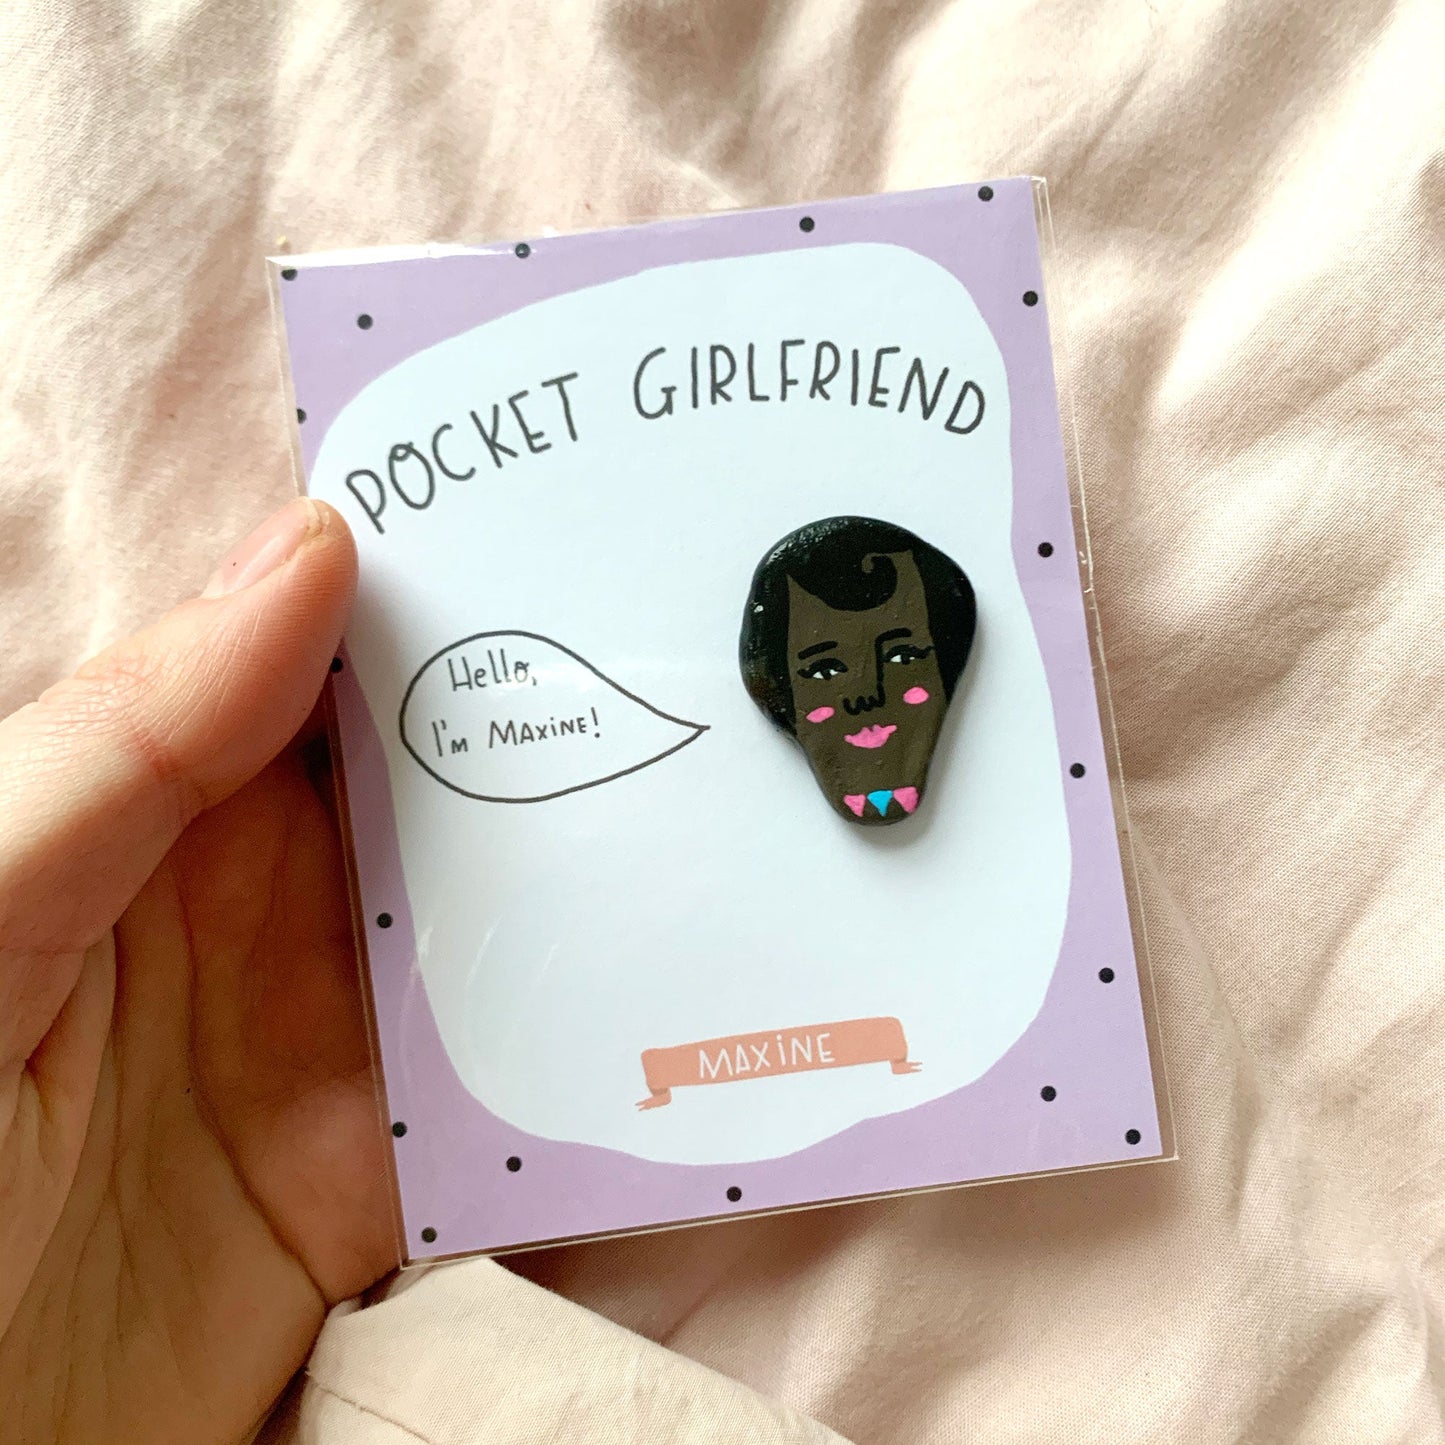 Pocket Girlfriend